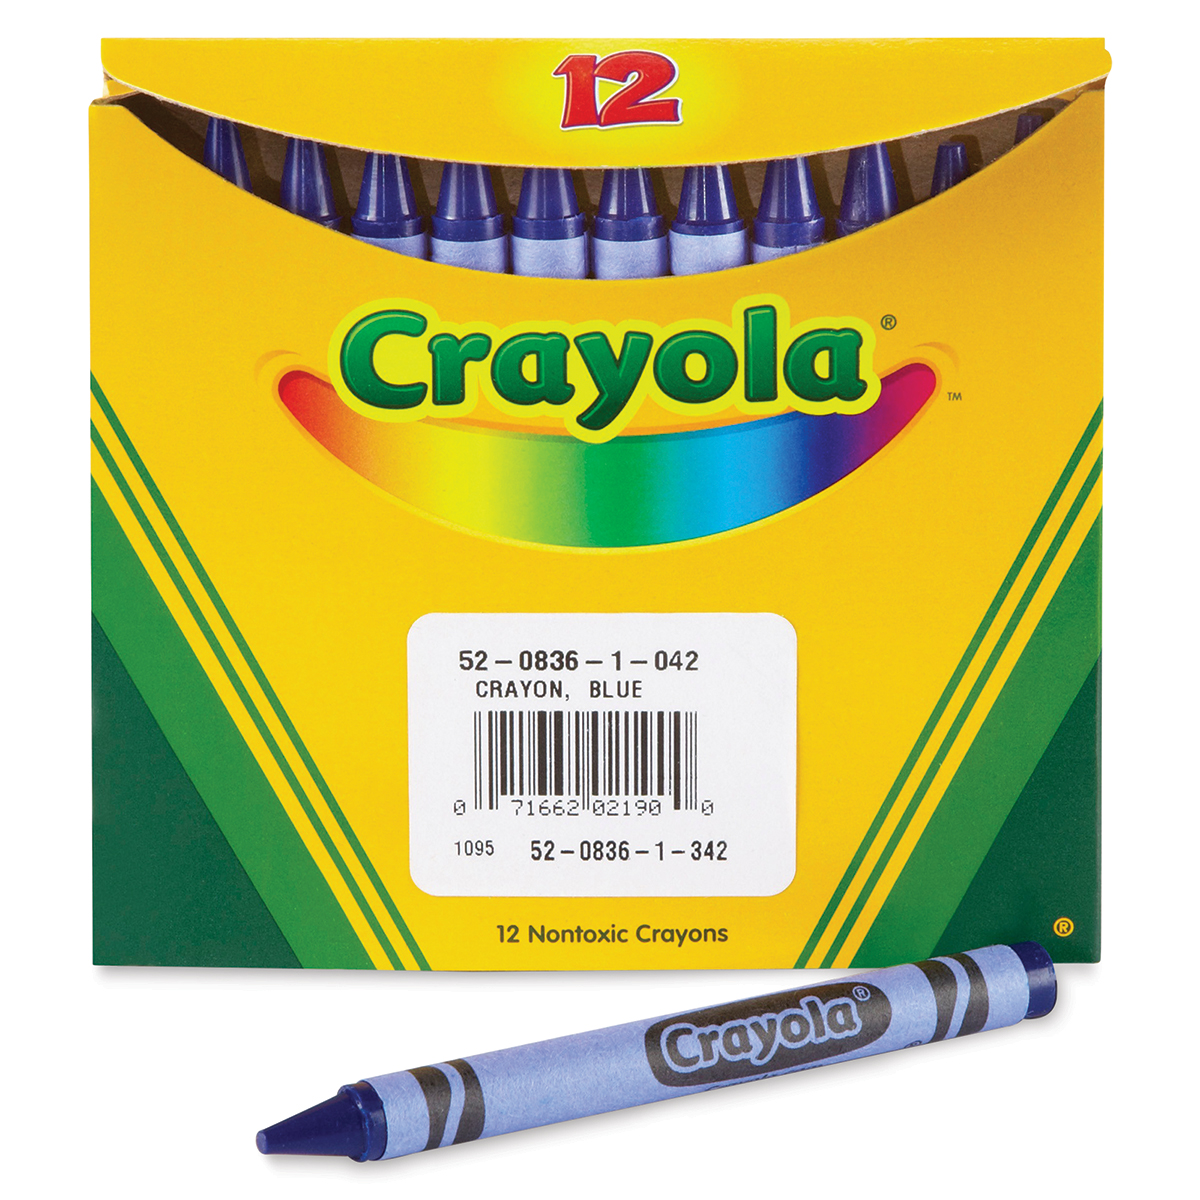 Crayola Crayons - Box of 12, Blue